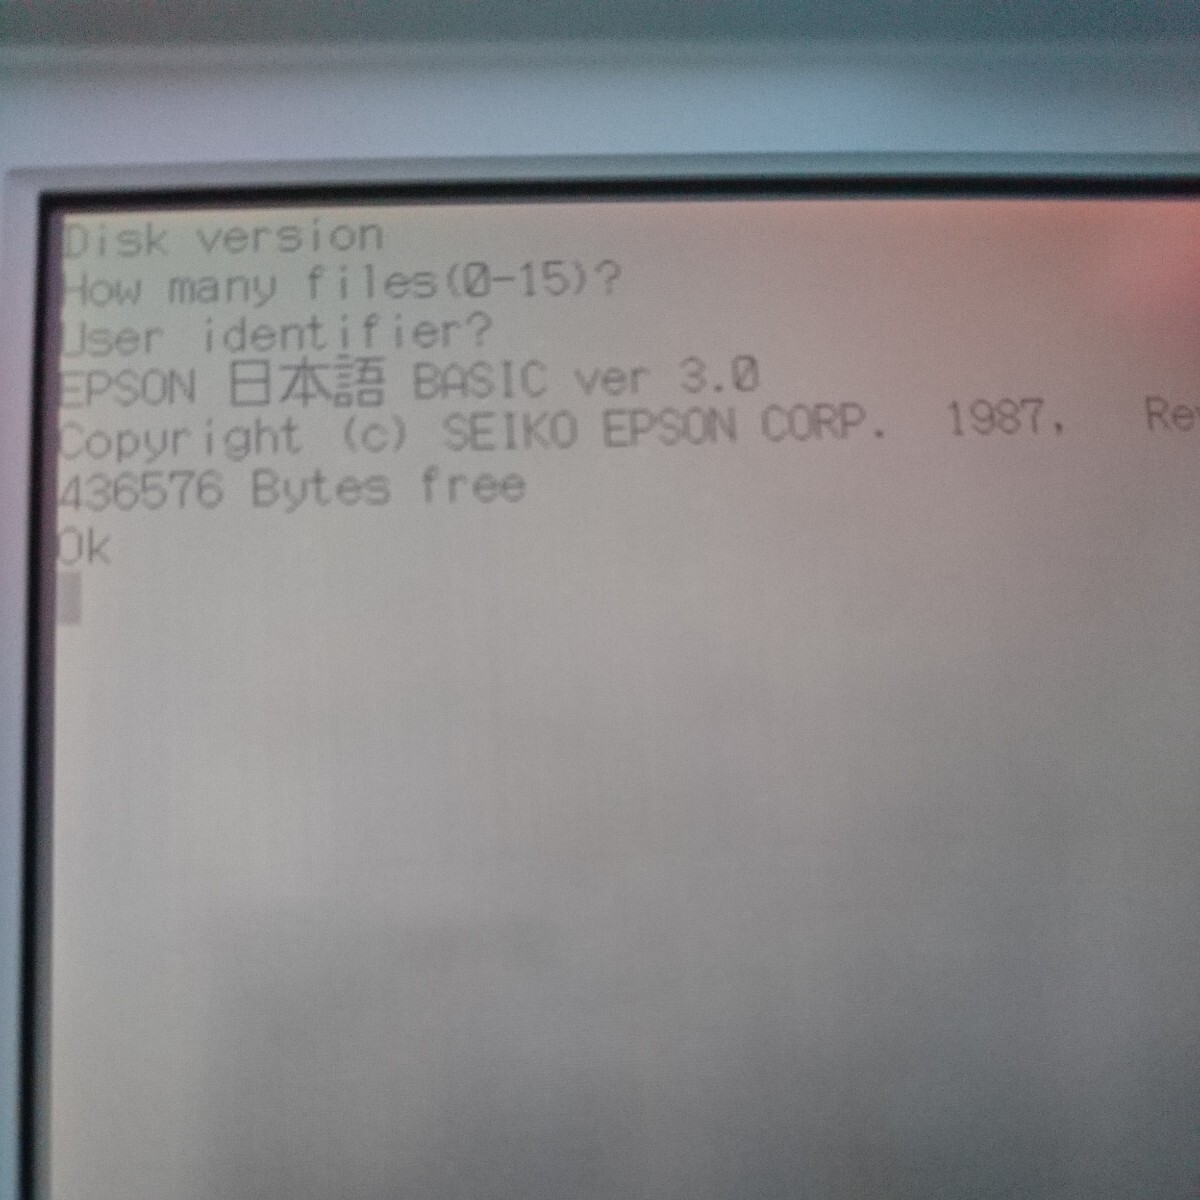 EPSON 日本語 Disk BASIC 3.0